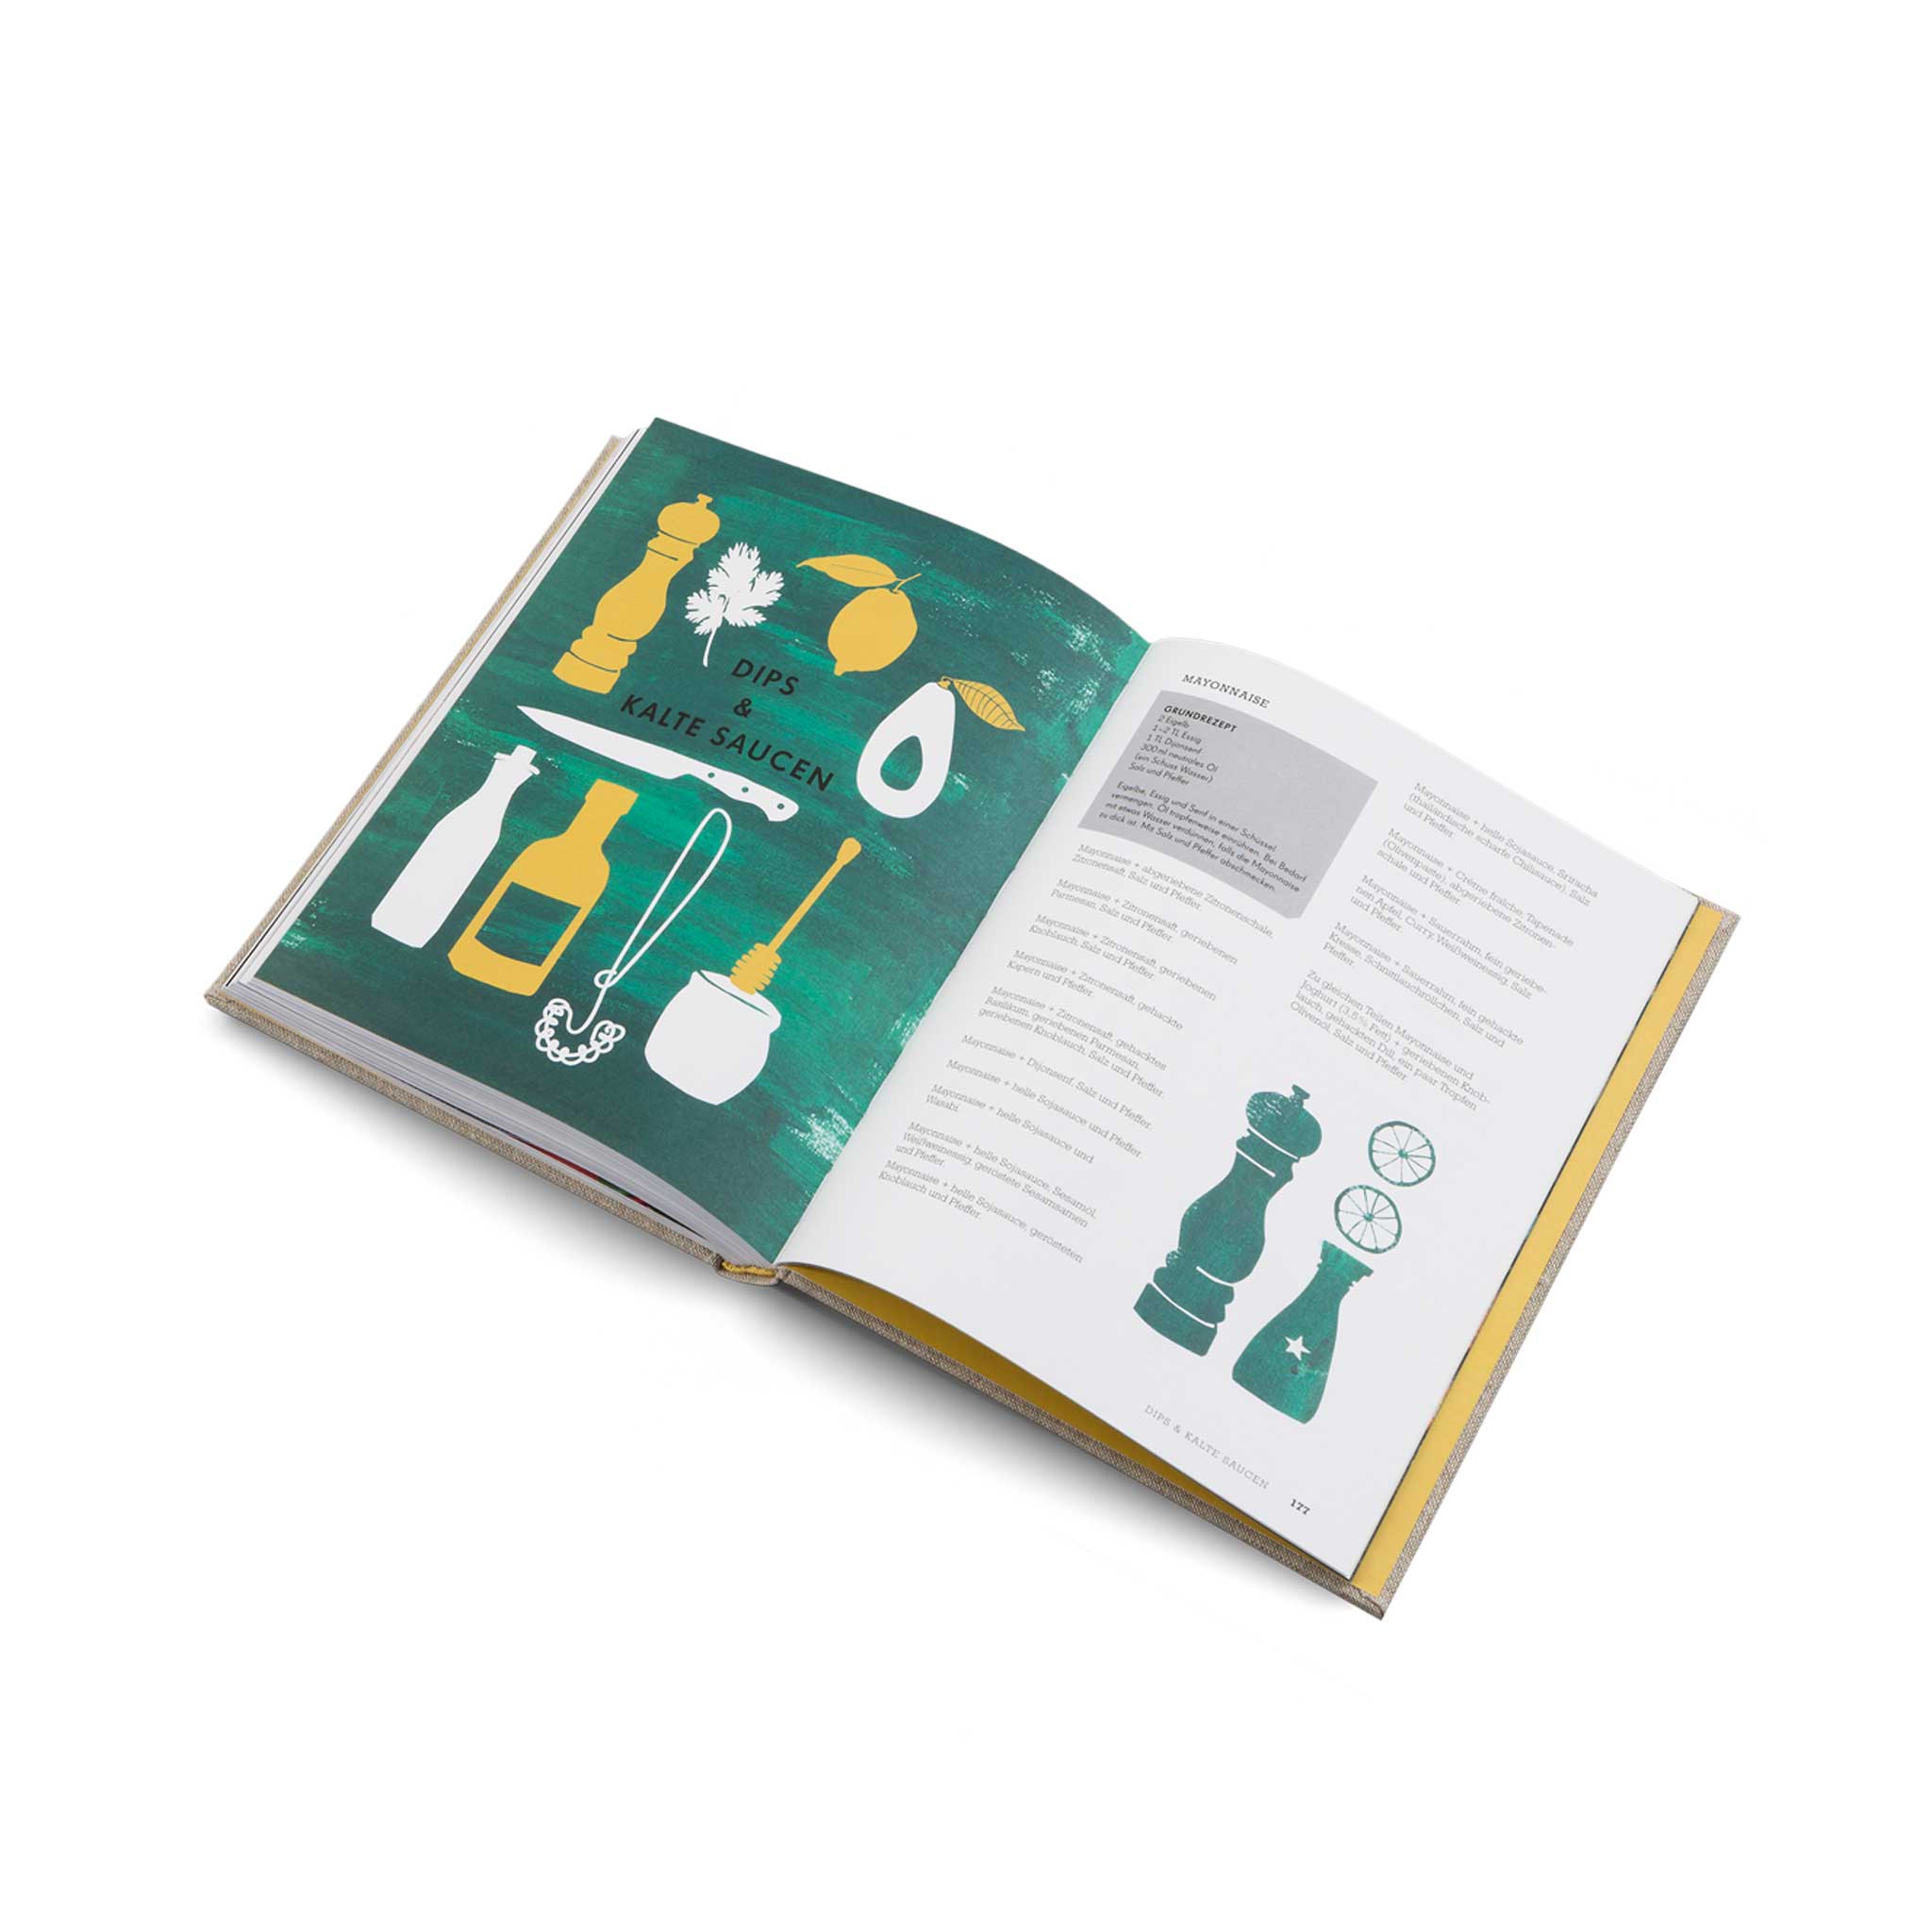 JUNGES GEMÜSE | Plat-focused recipes for the kitchen | COOKBOOK | German Edition | Gestalten Verlag